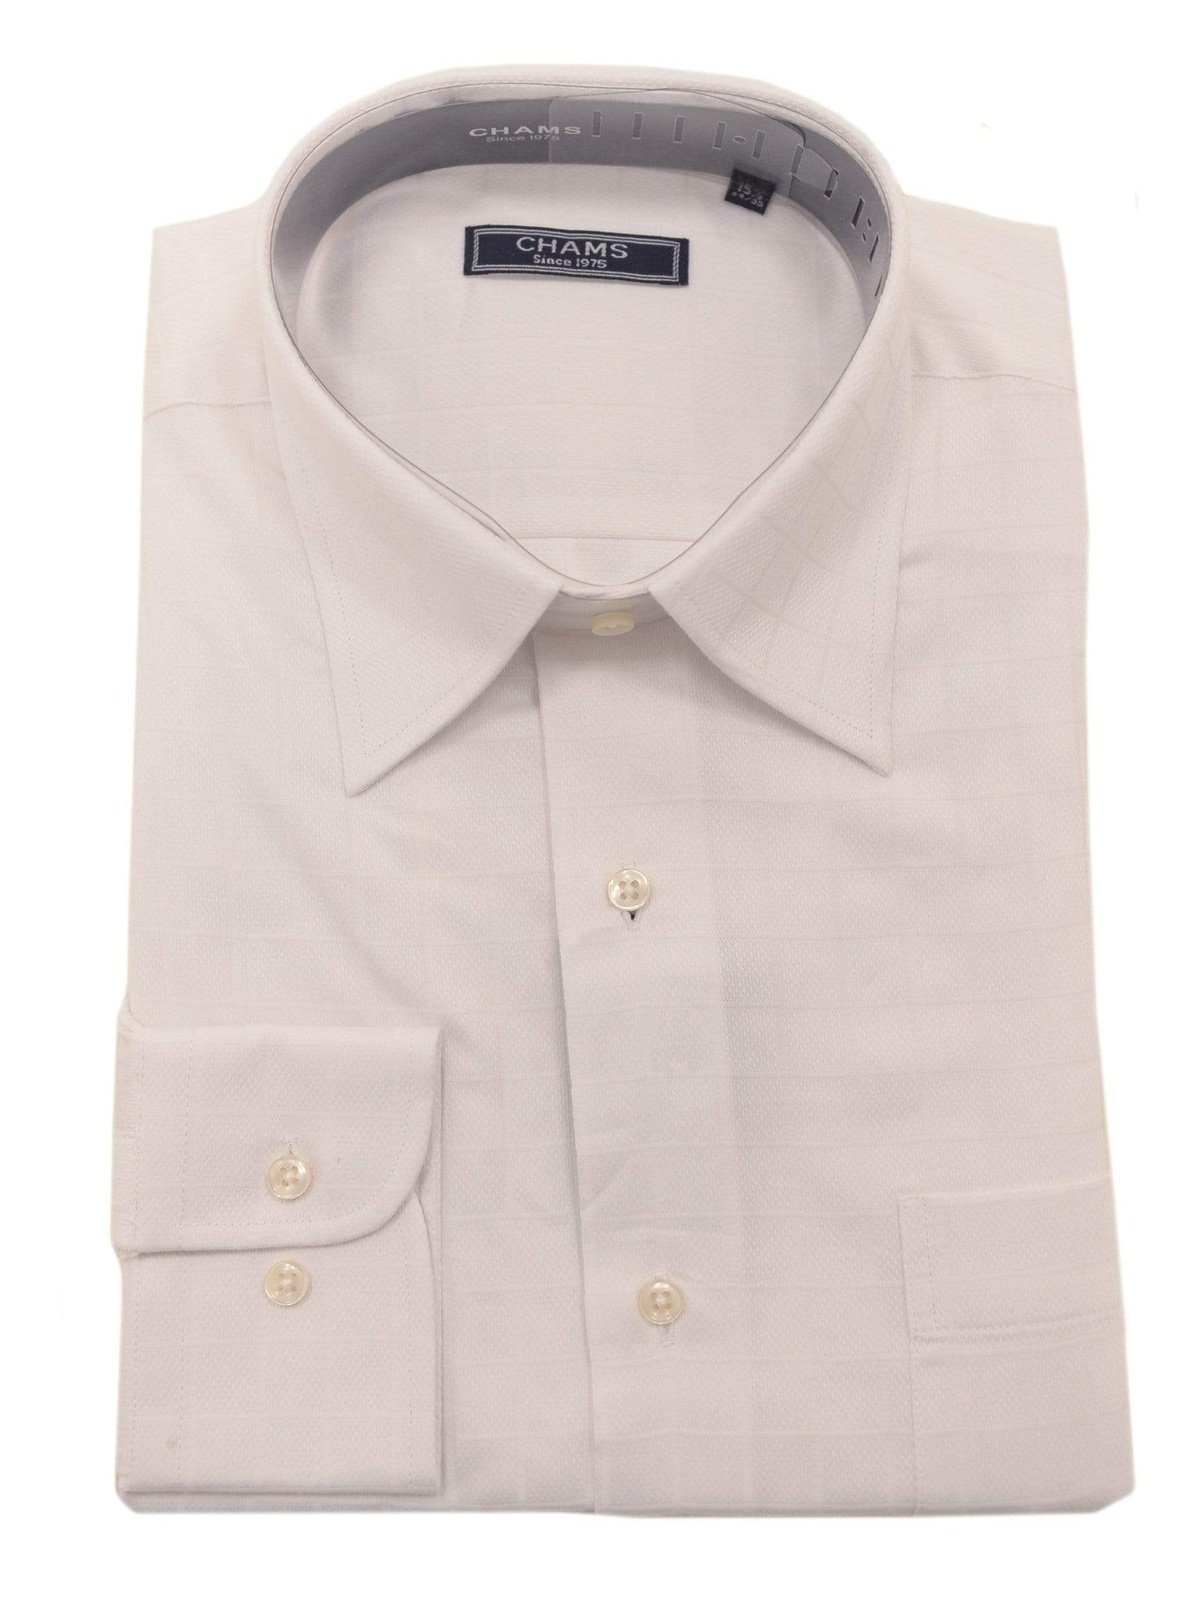 Chams SHIRTS Chams Classic Fit White Tonal Plaid Fine Combed Cotton Dress Shirt